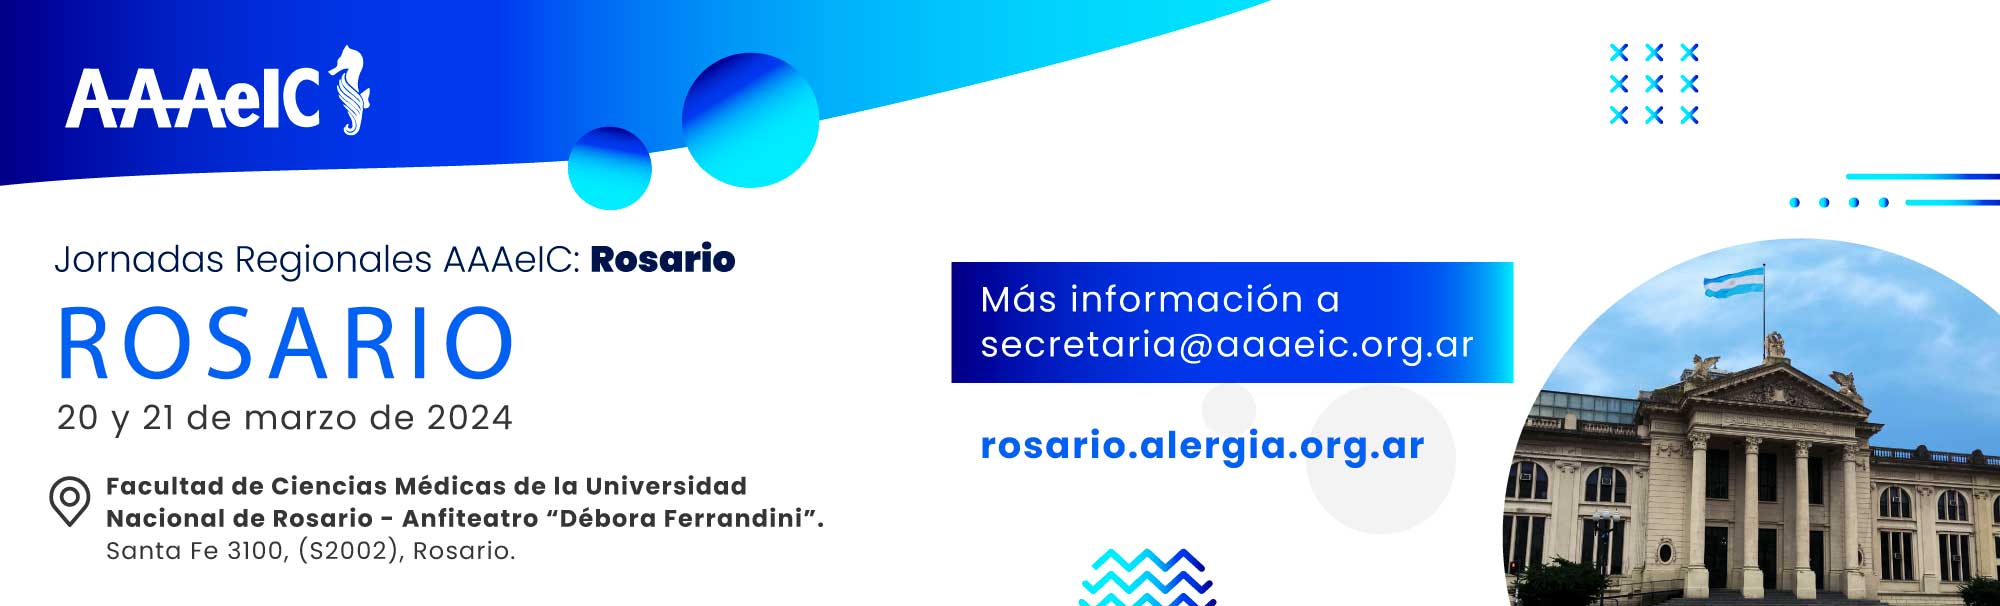 Jornadas Regionales AAAeIC: Rosario